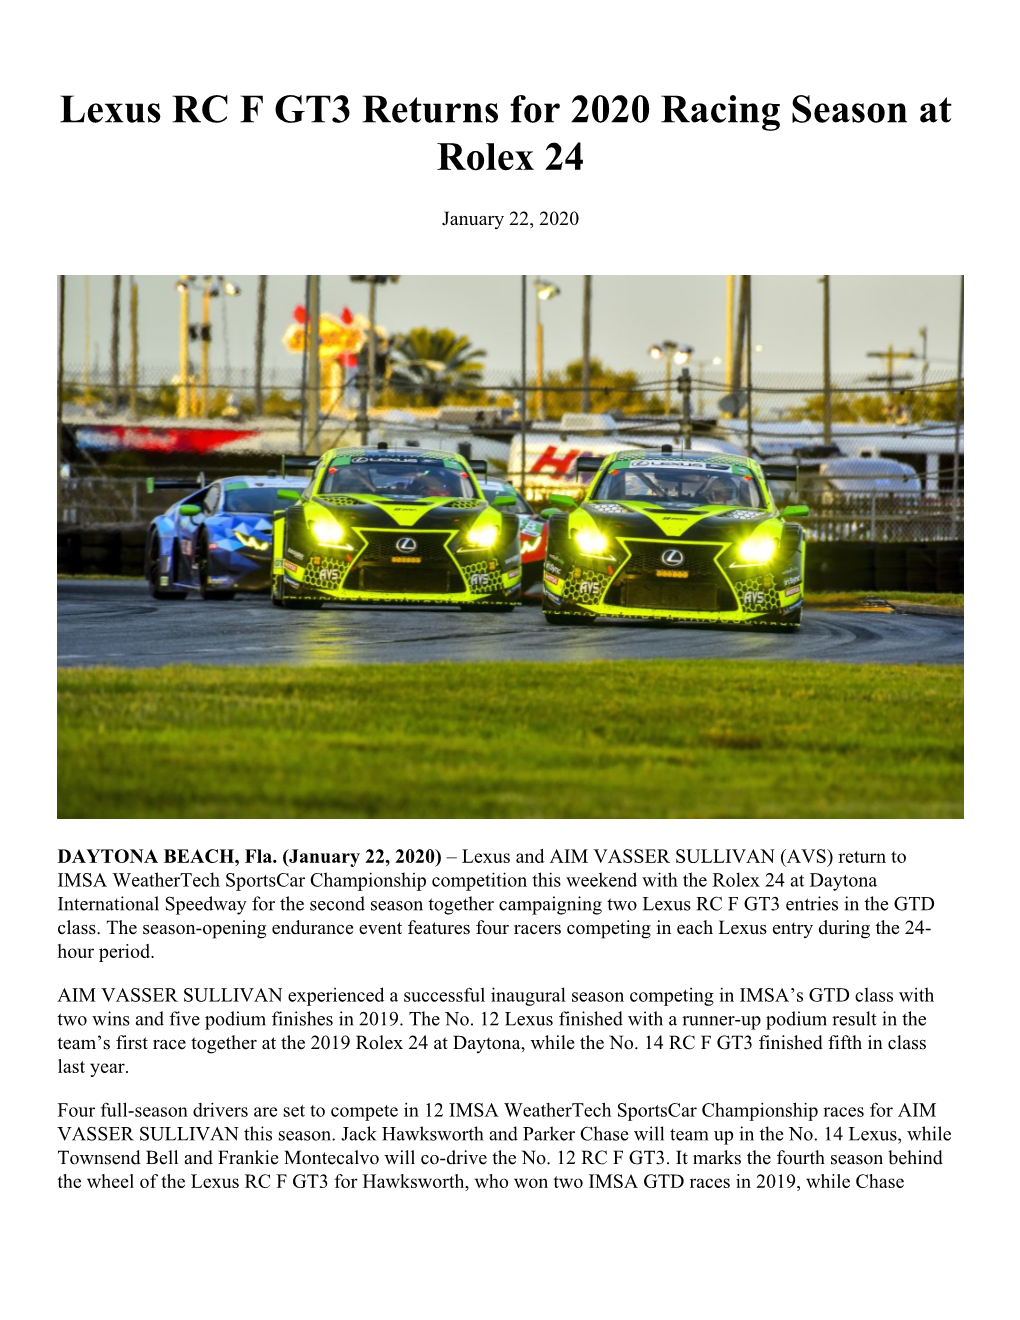 Lexus RC F GT3 Returns for 2020 Racing Season at Rolex 24